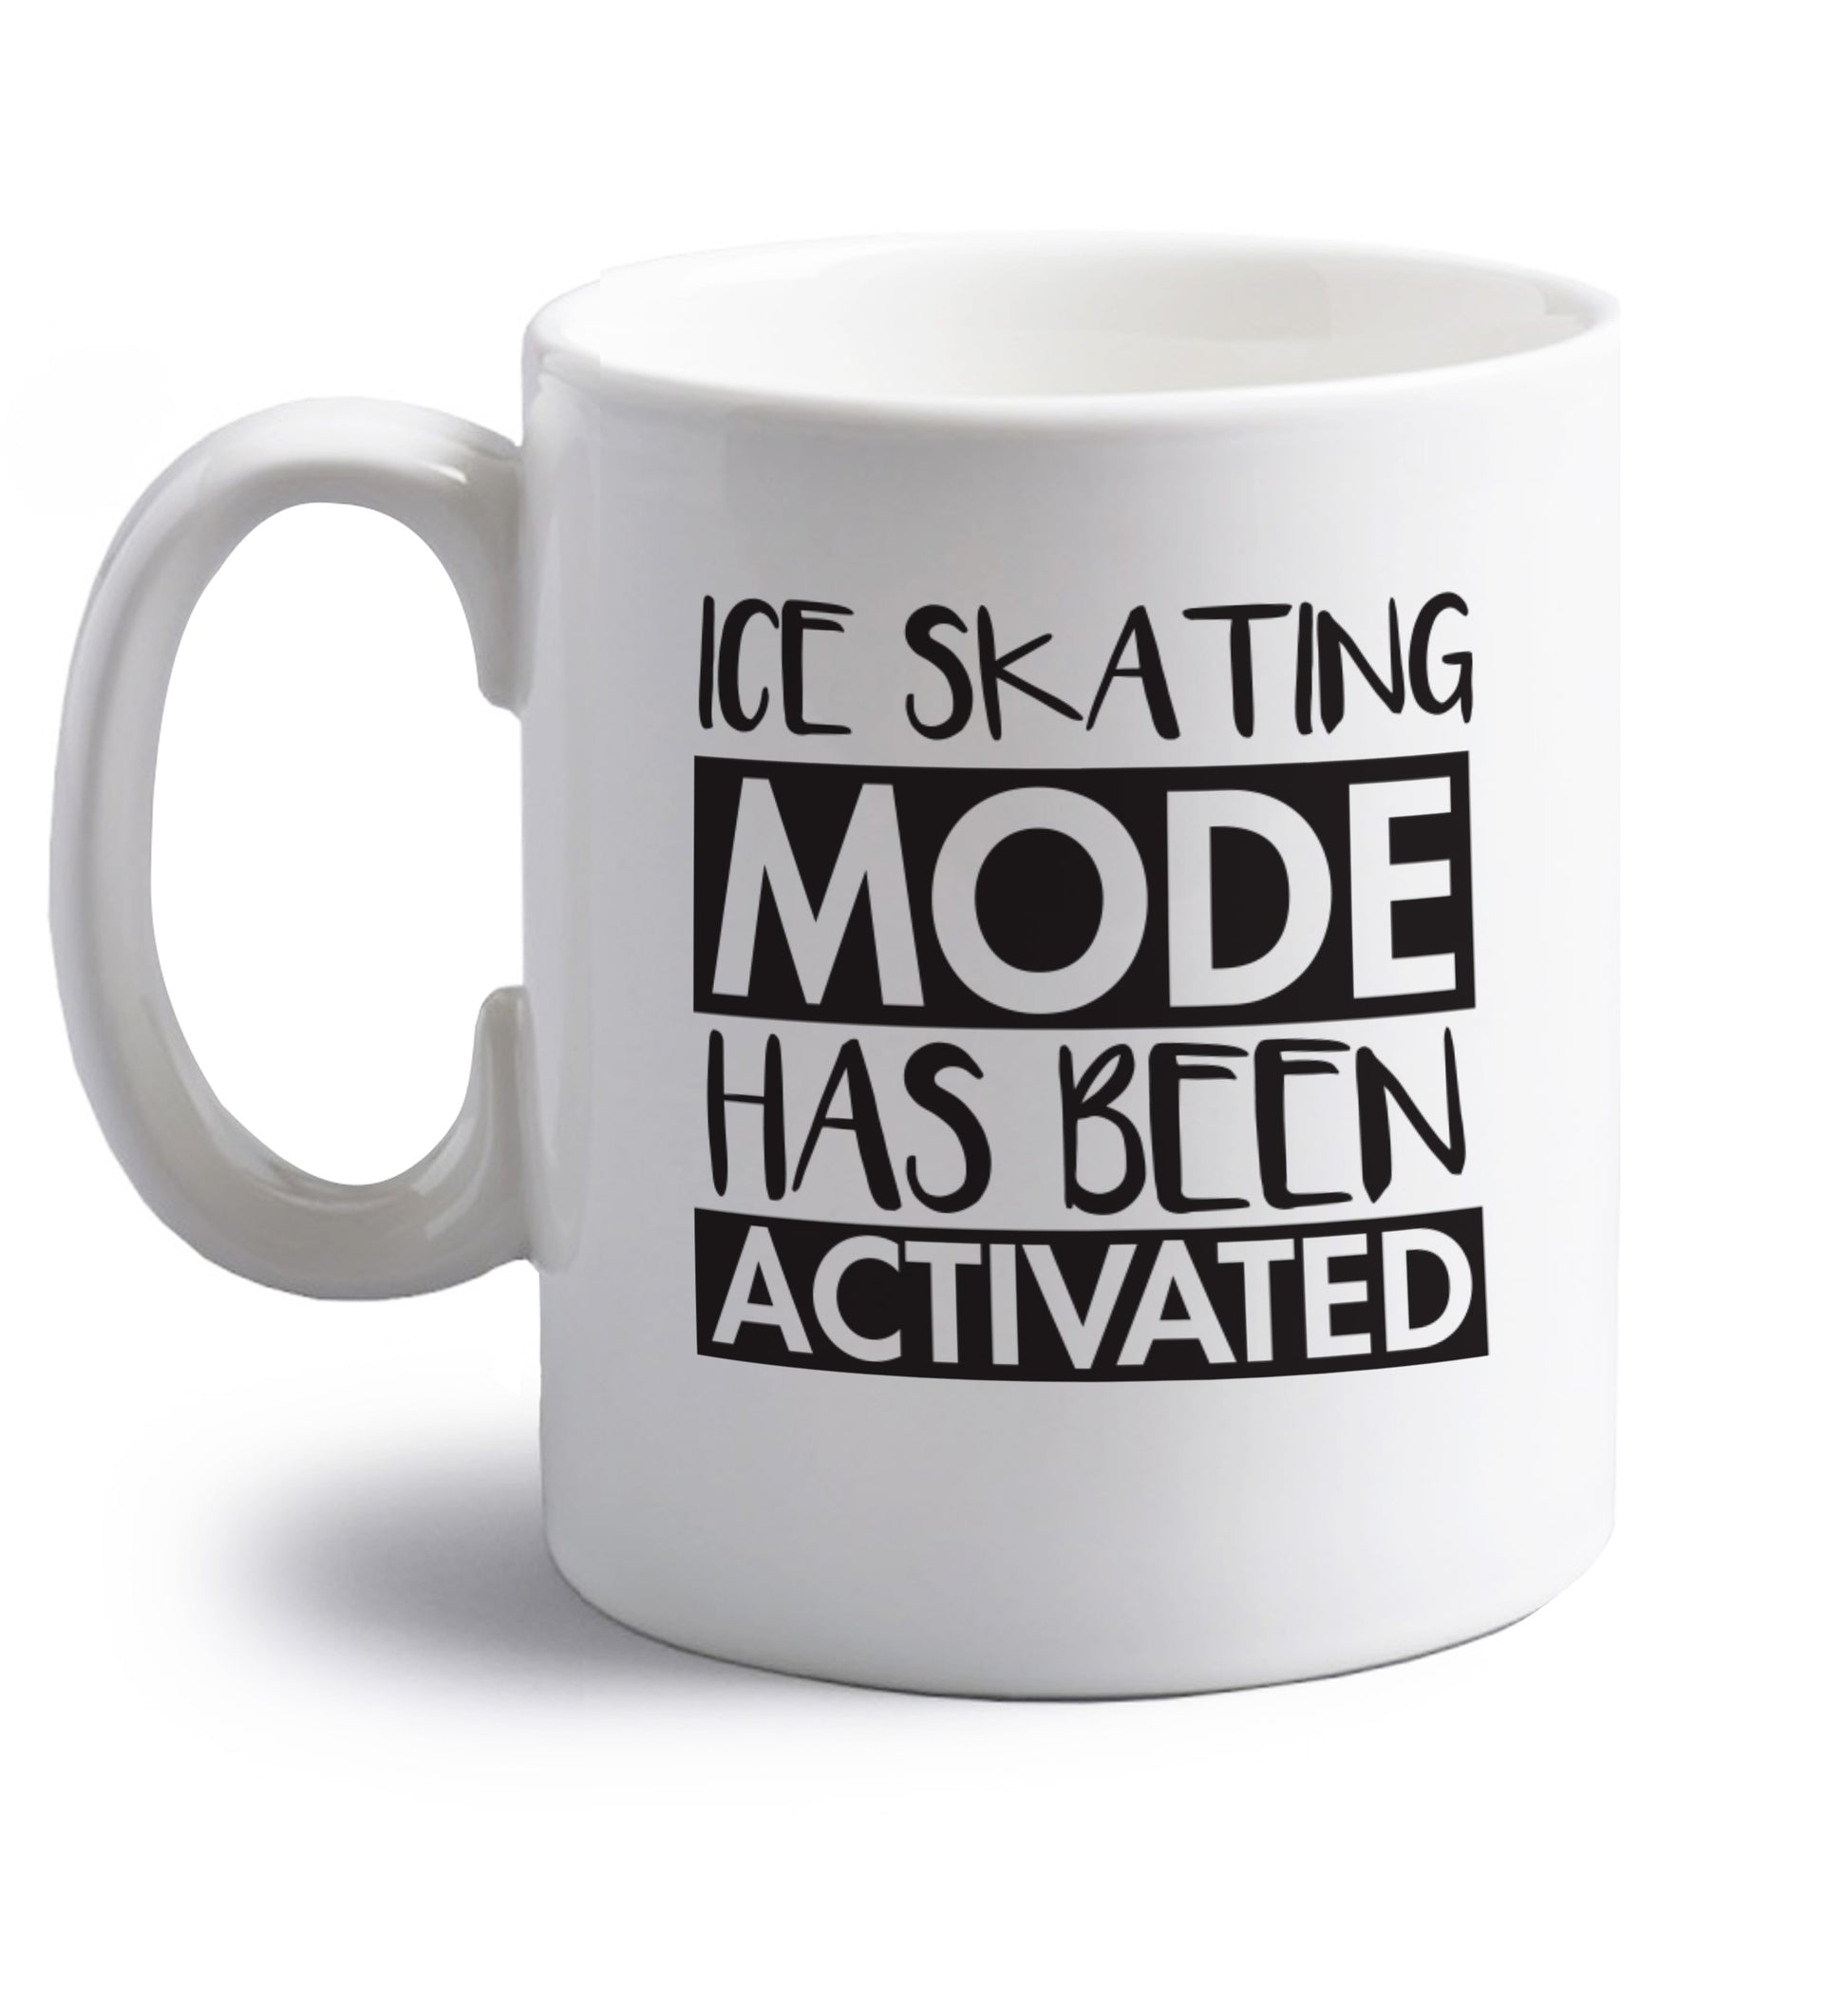 Ice skating mode activated right handed white ceramic mug 